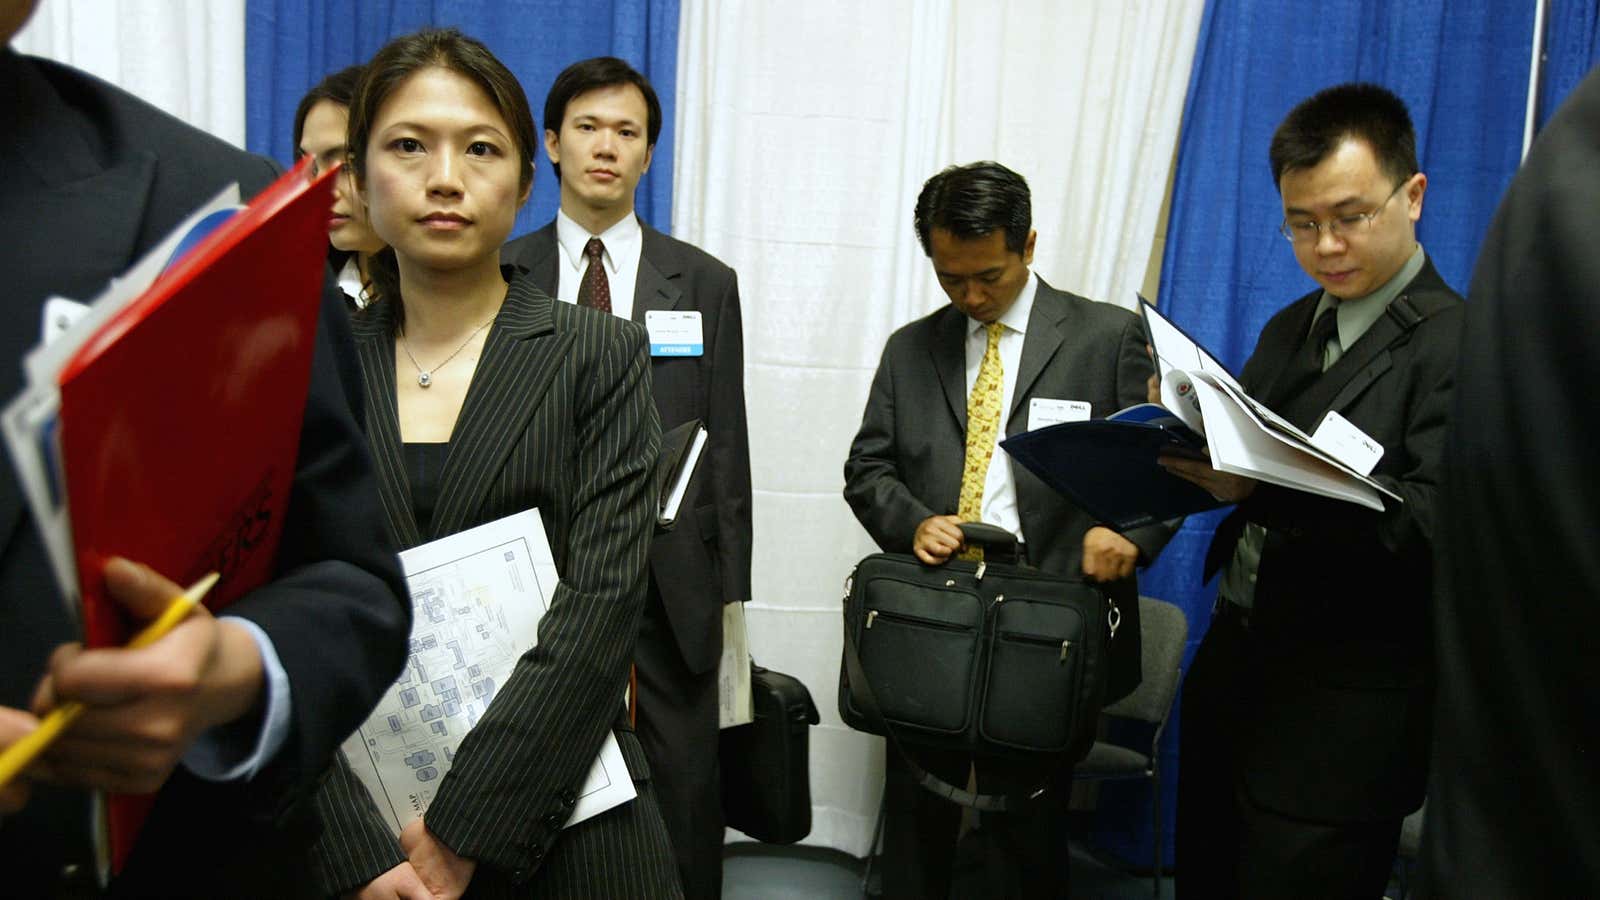 Job applicants at Asian Diversity Career Expo.